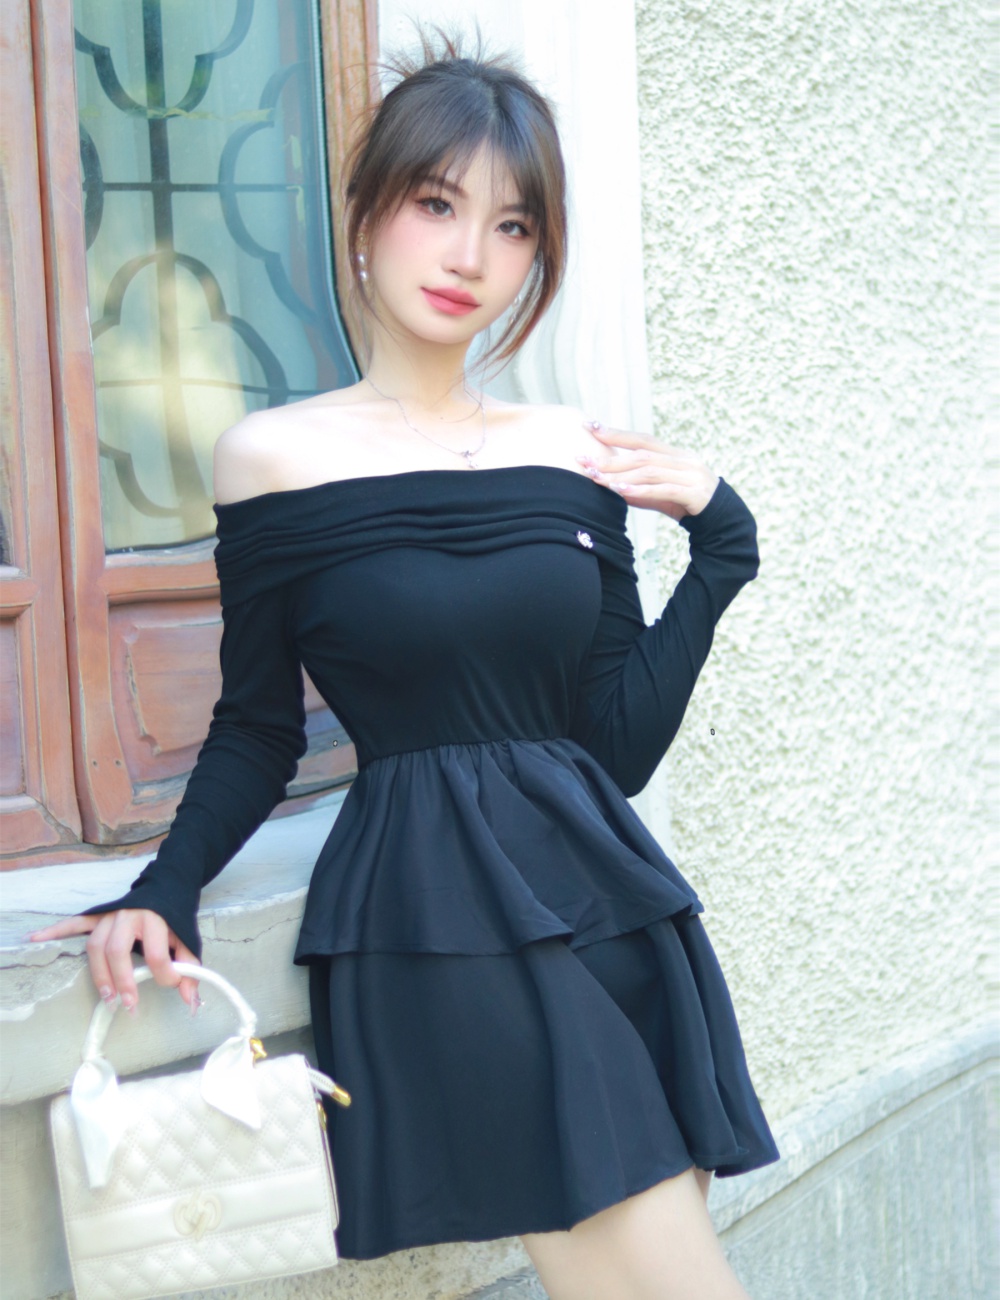 Hepburn style flat shoulder dress for women